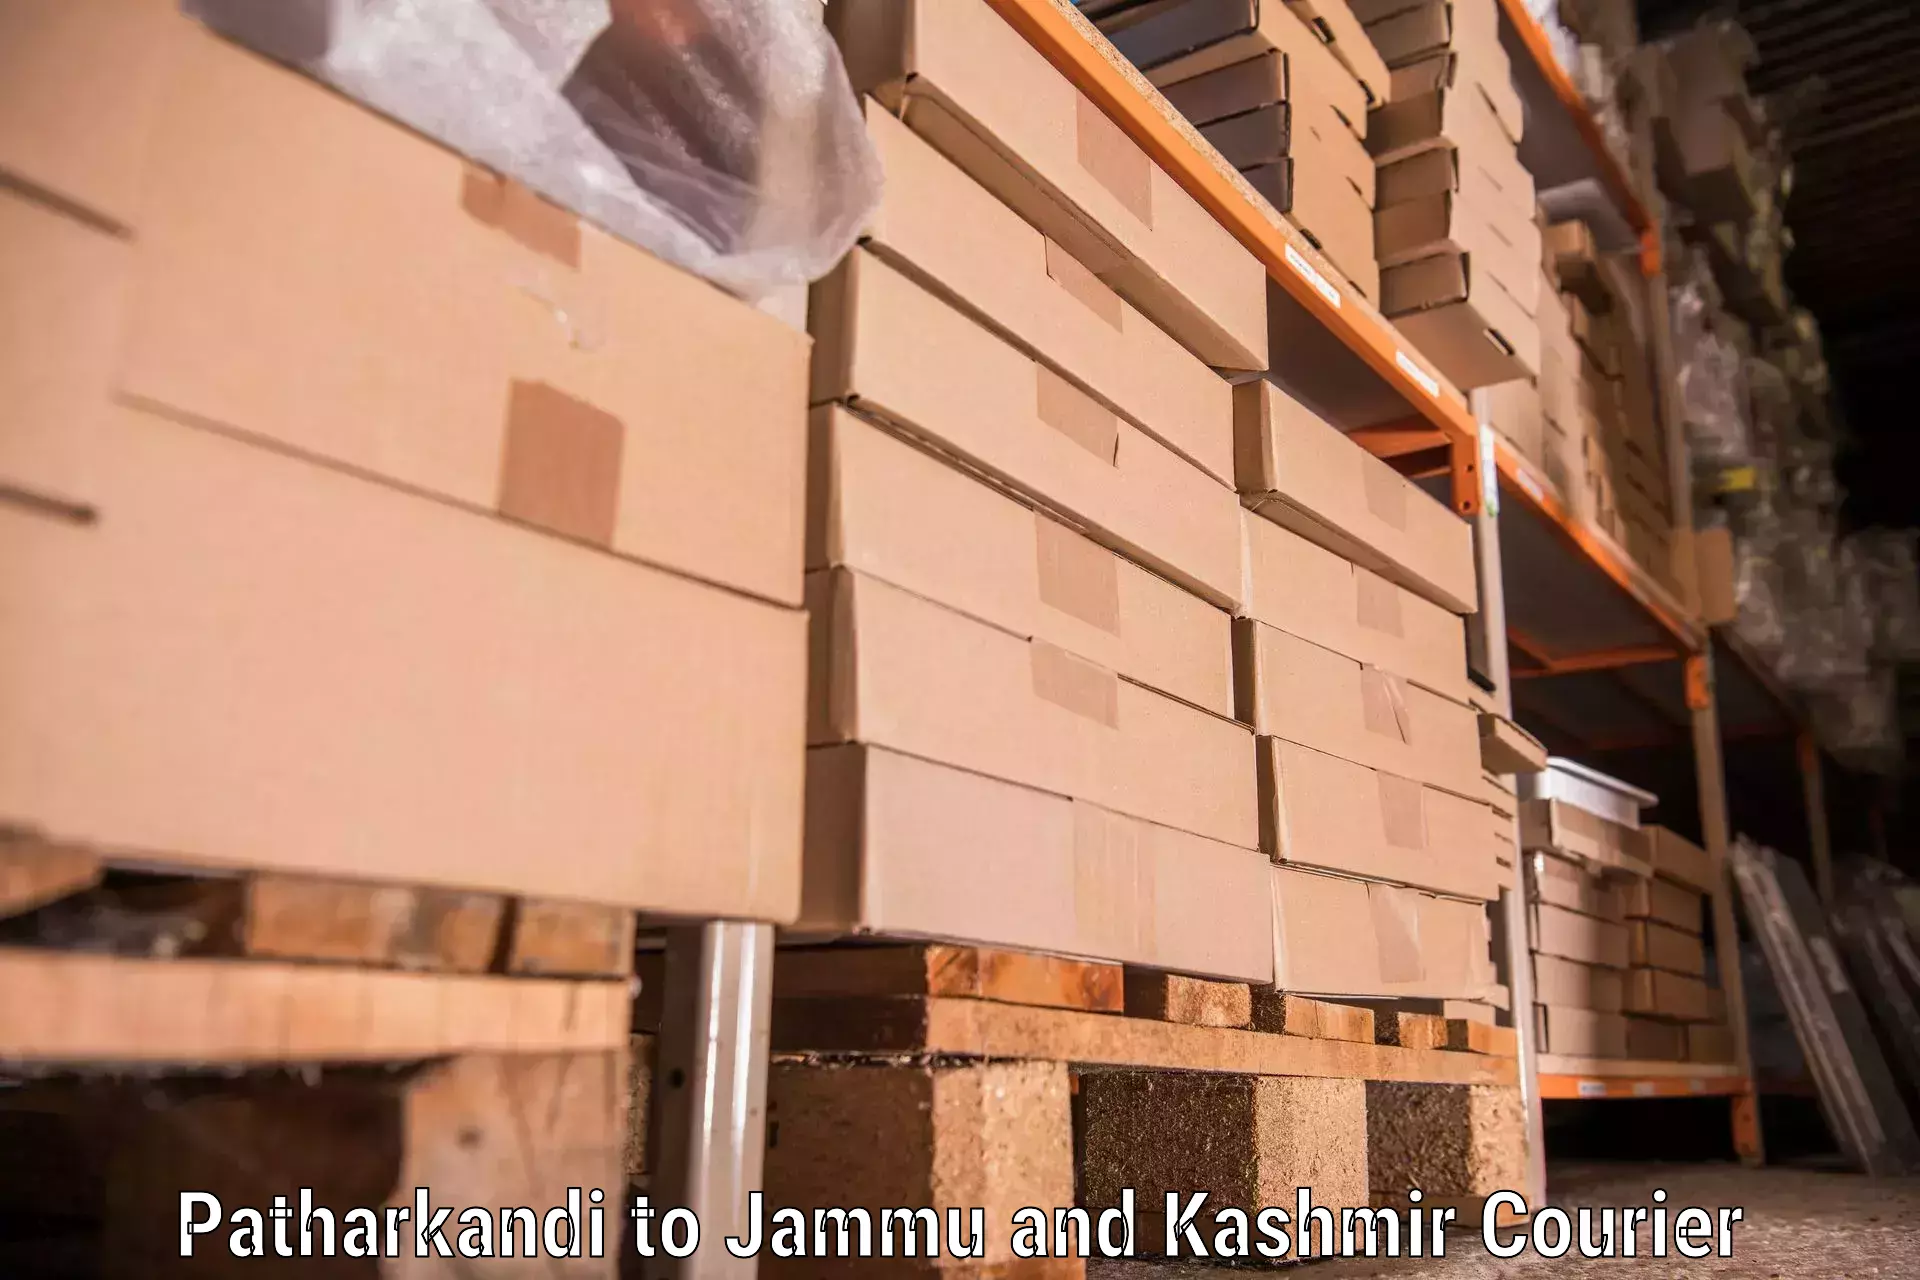 Moving and storage services in Patharkandi to Srinagar Kashmir